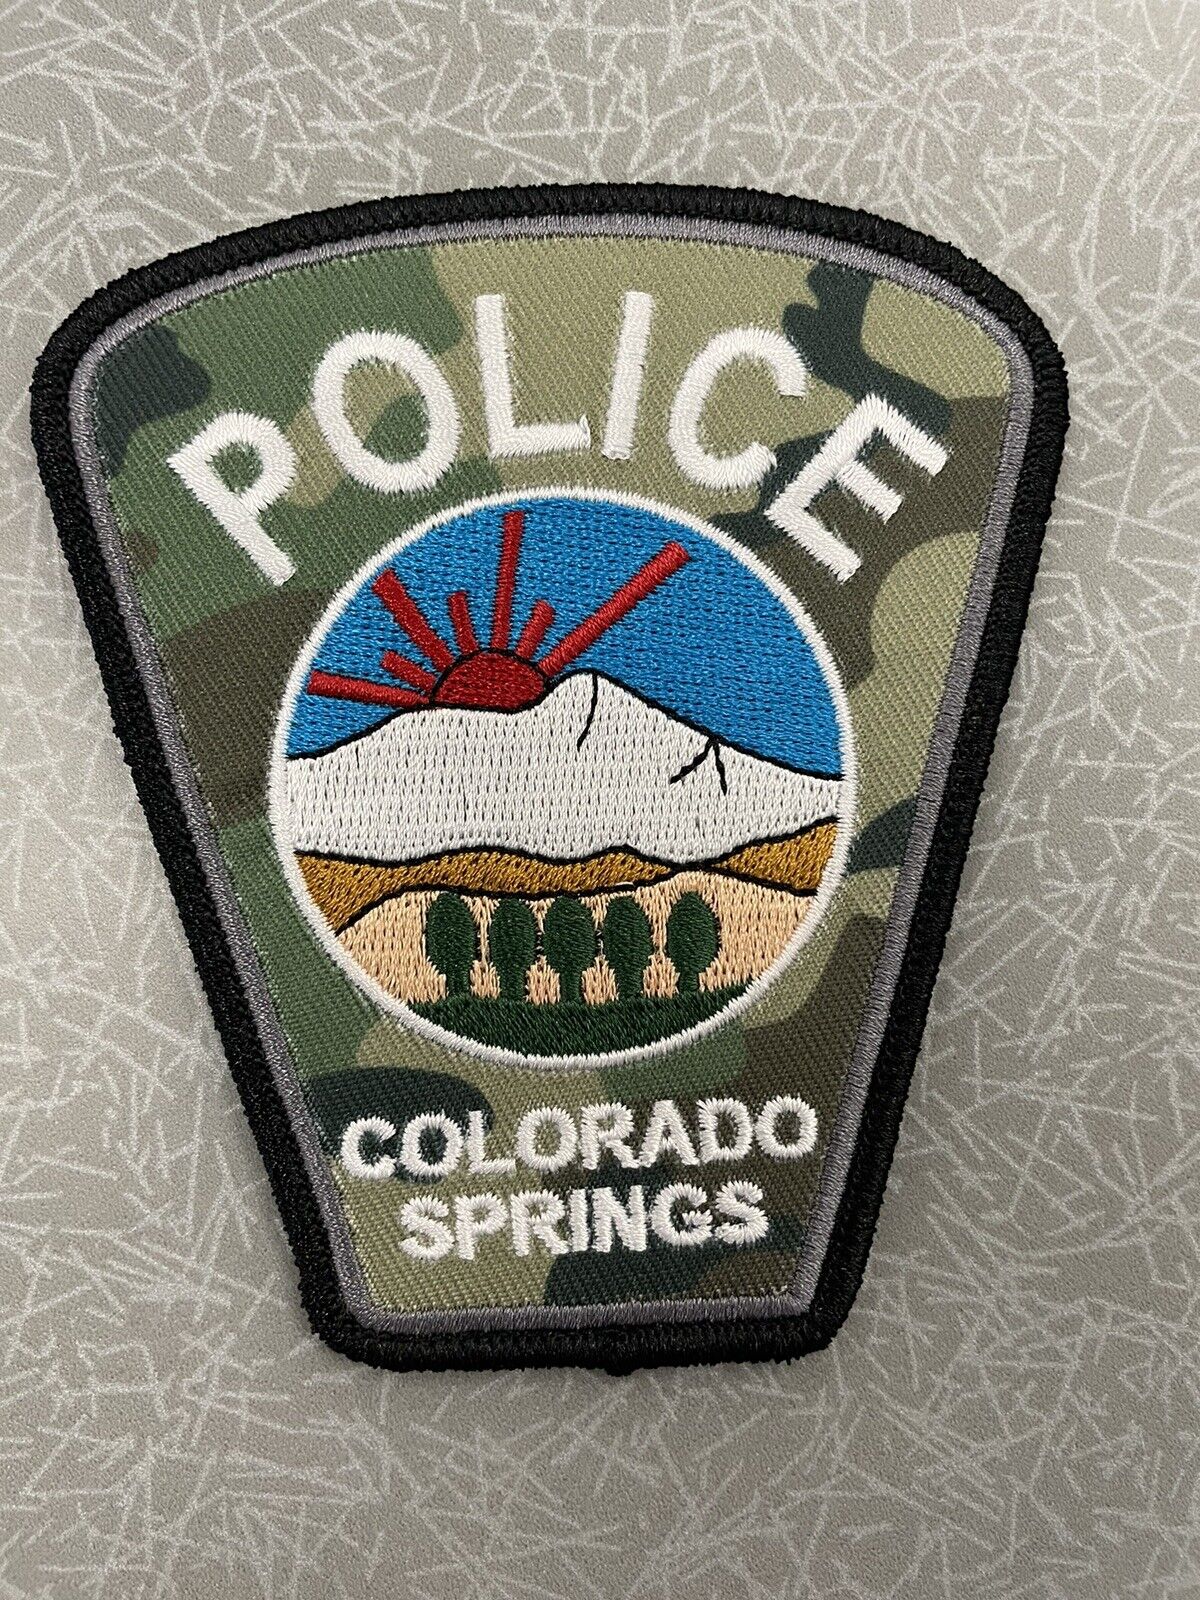 *rare* Limited Edition Colorado Springs Police Patch. Military Appreciation.